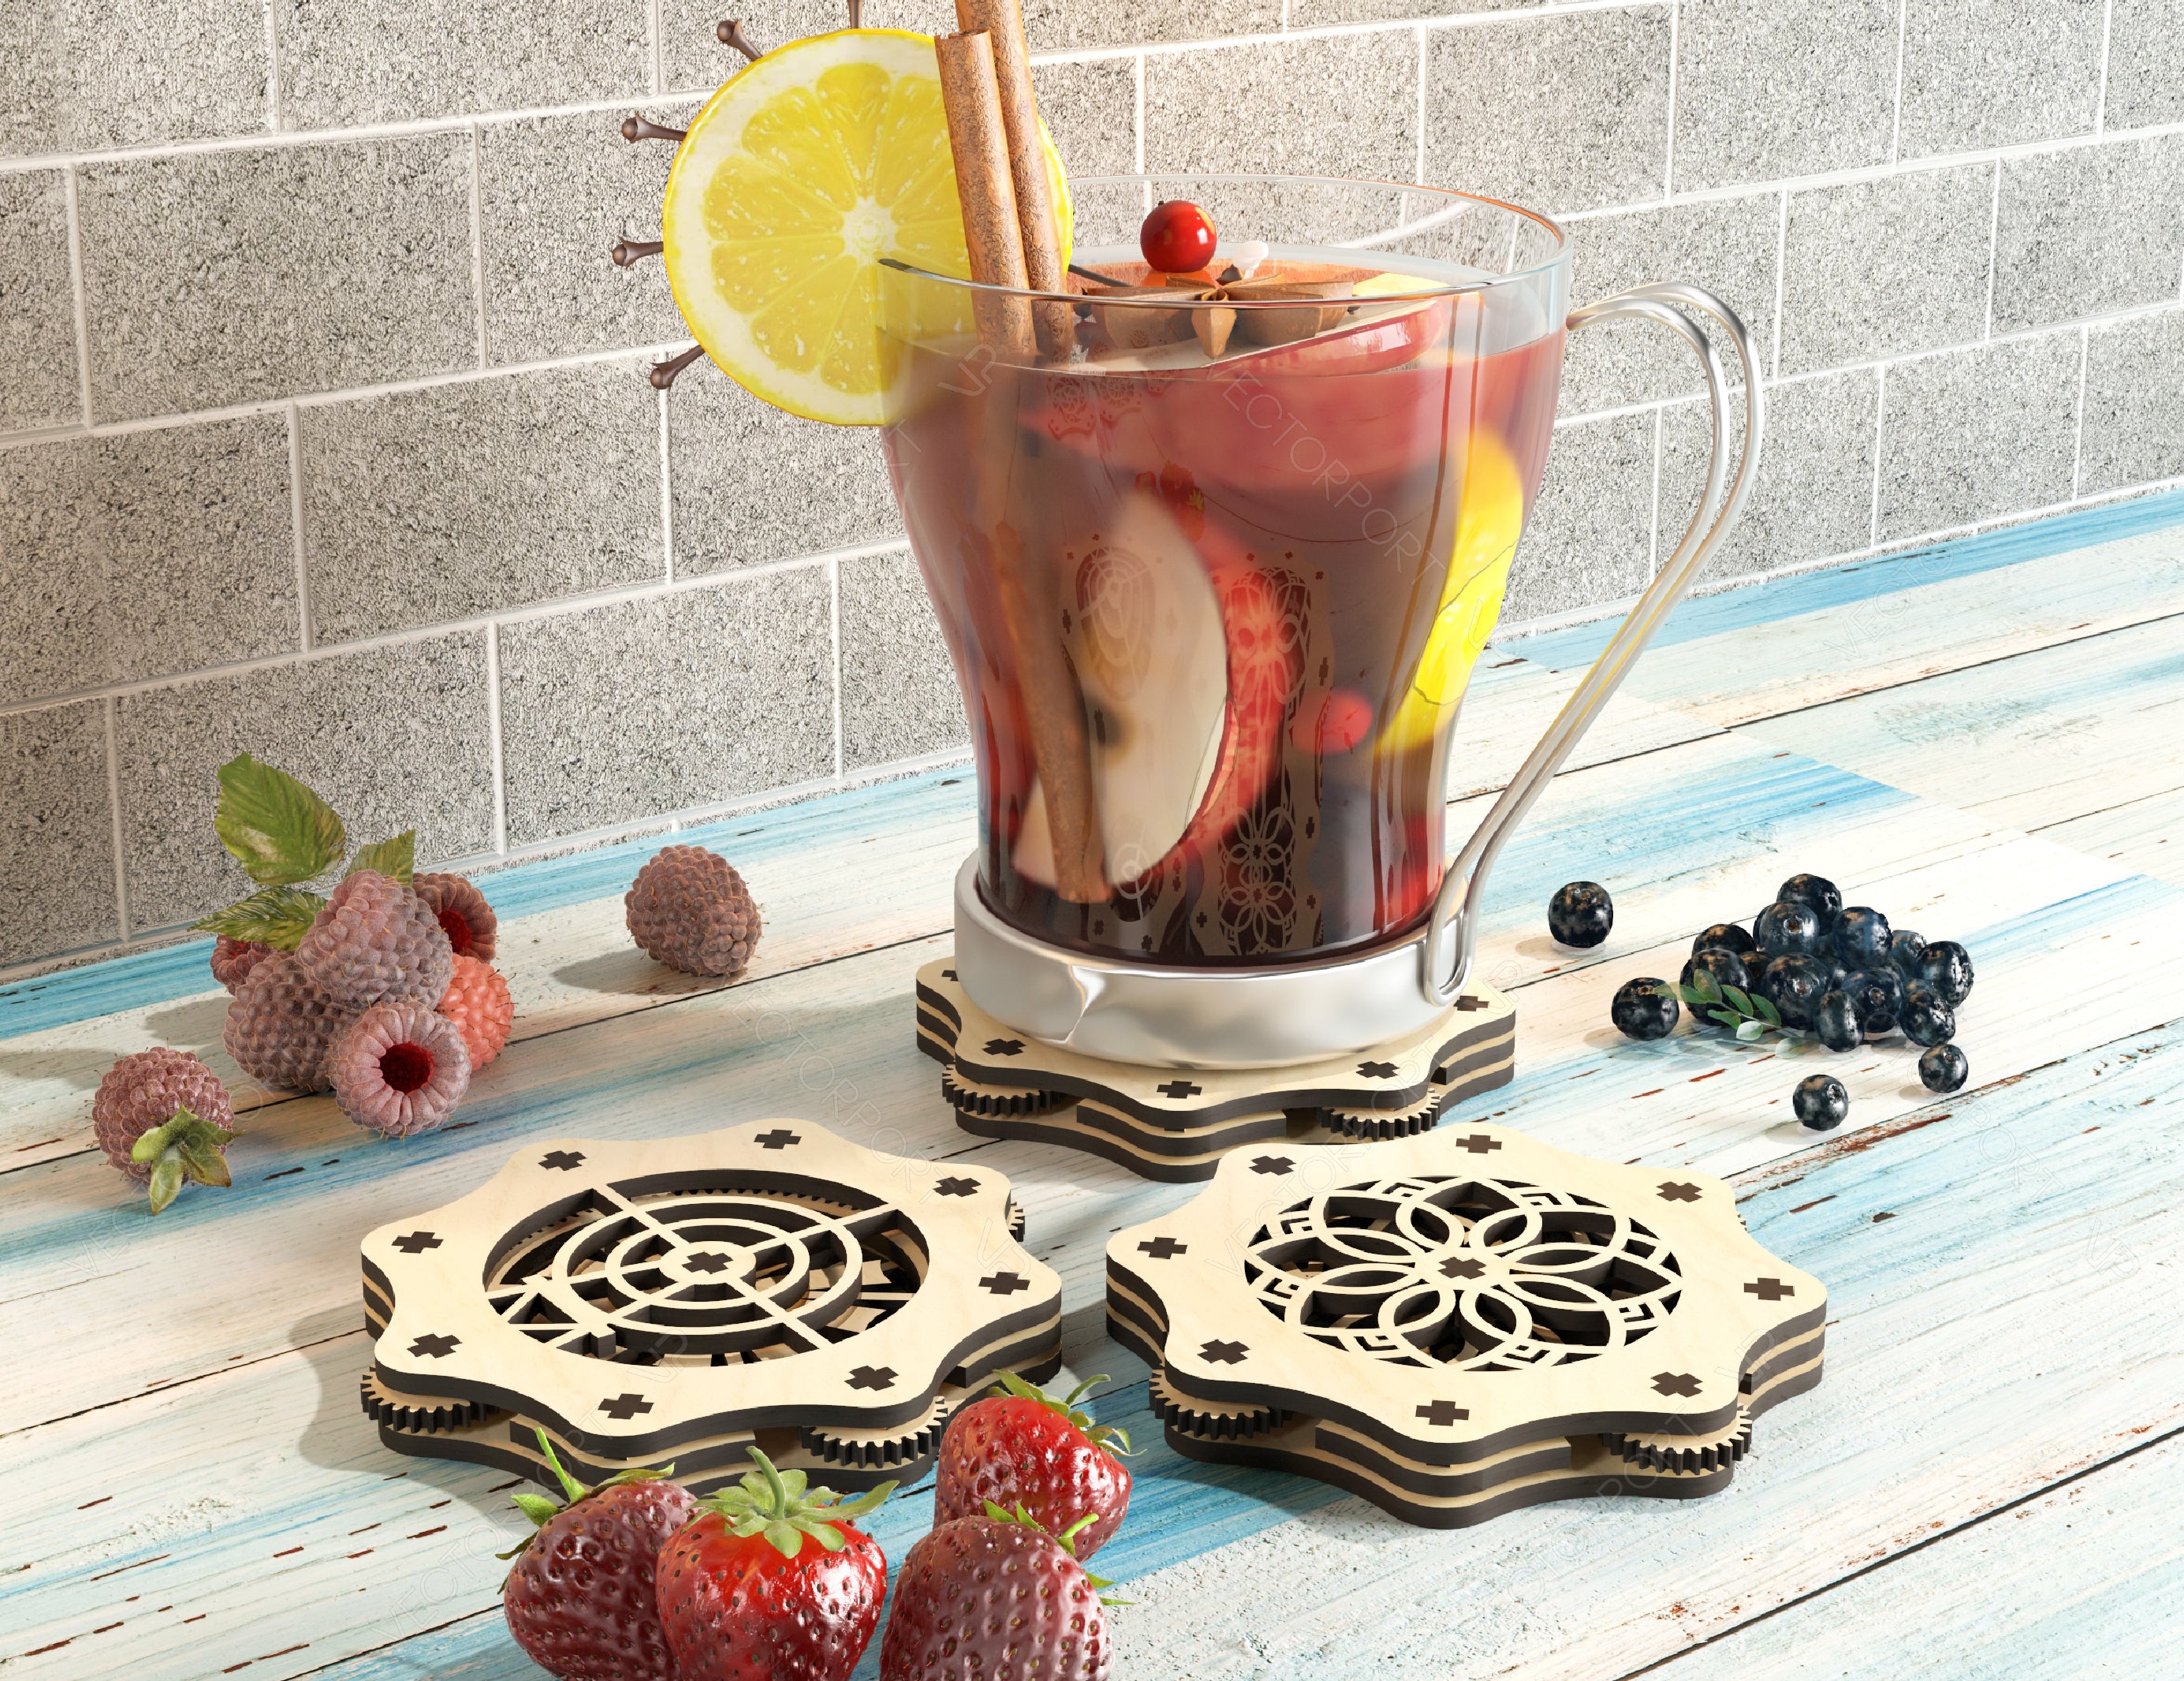 Coaster Mechanical Laser Cut Windmill Theme Shape Tea Coffee Cup Mat Pad Placemat Tableware Digital Download |#223|